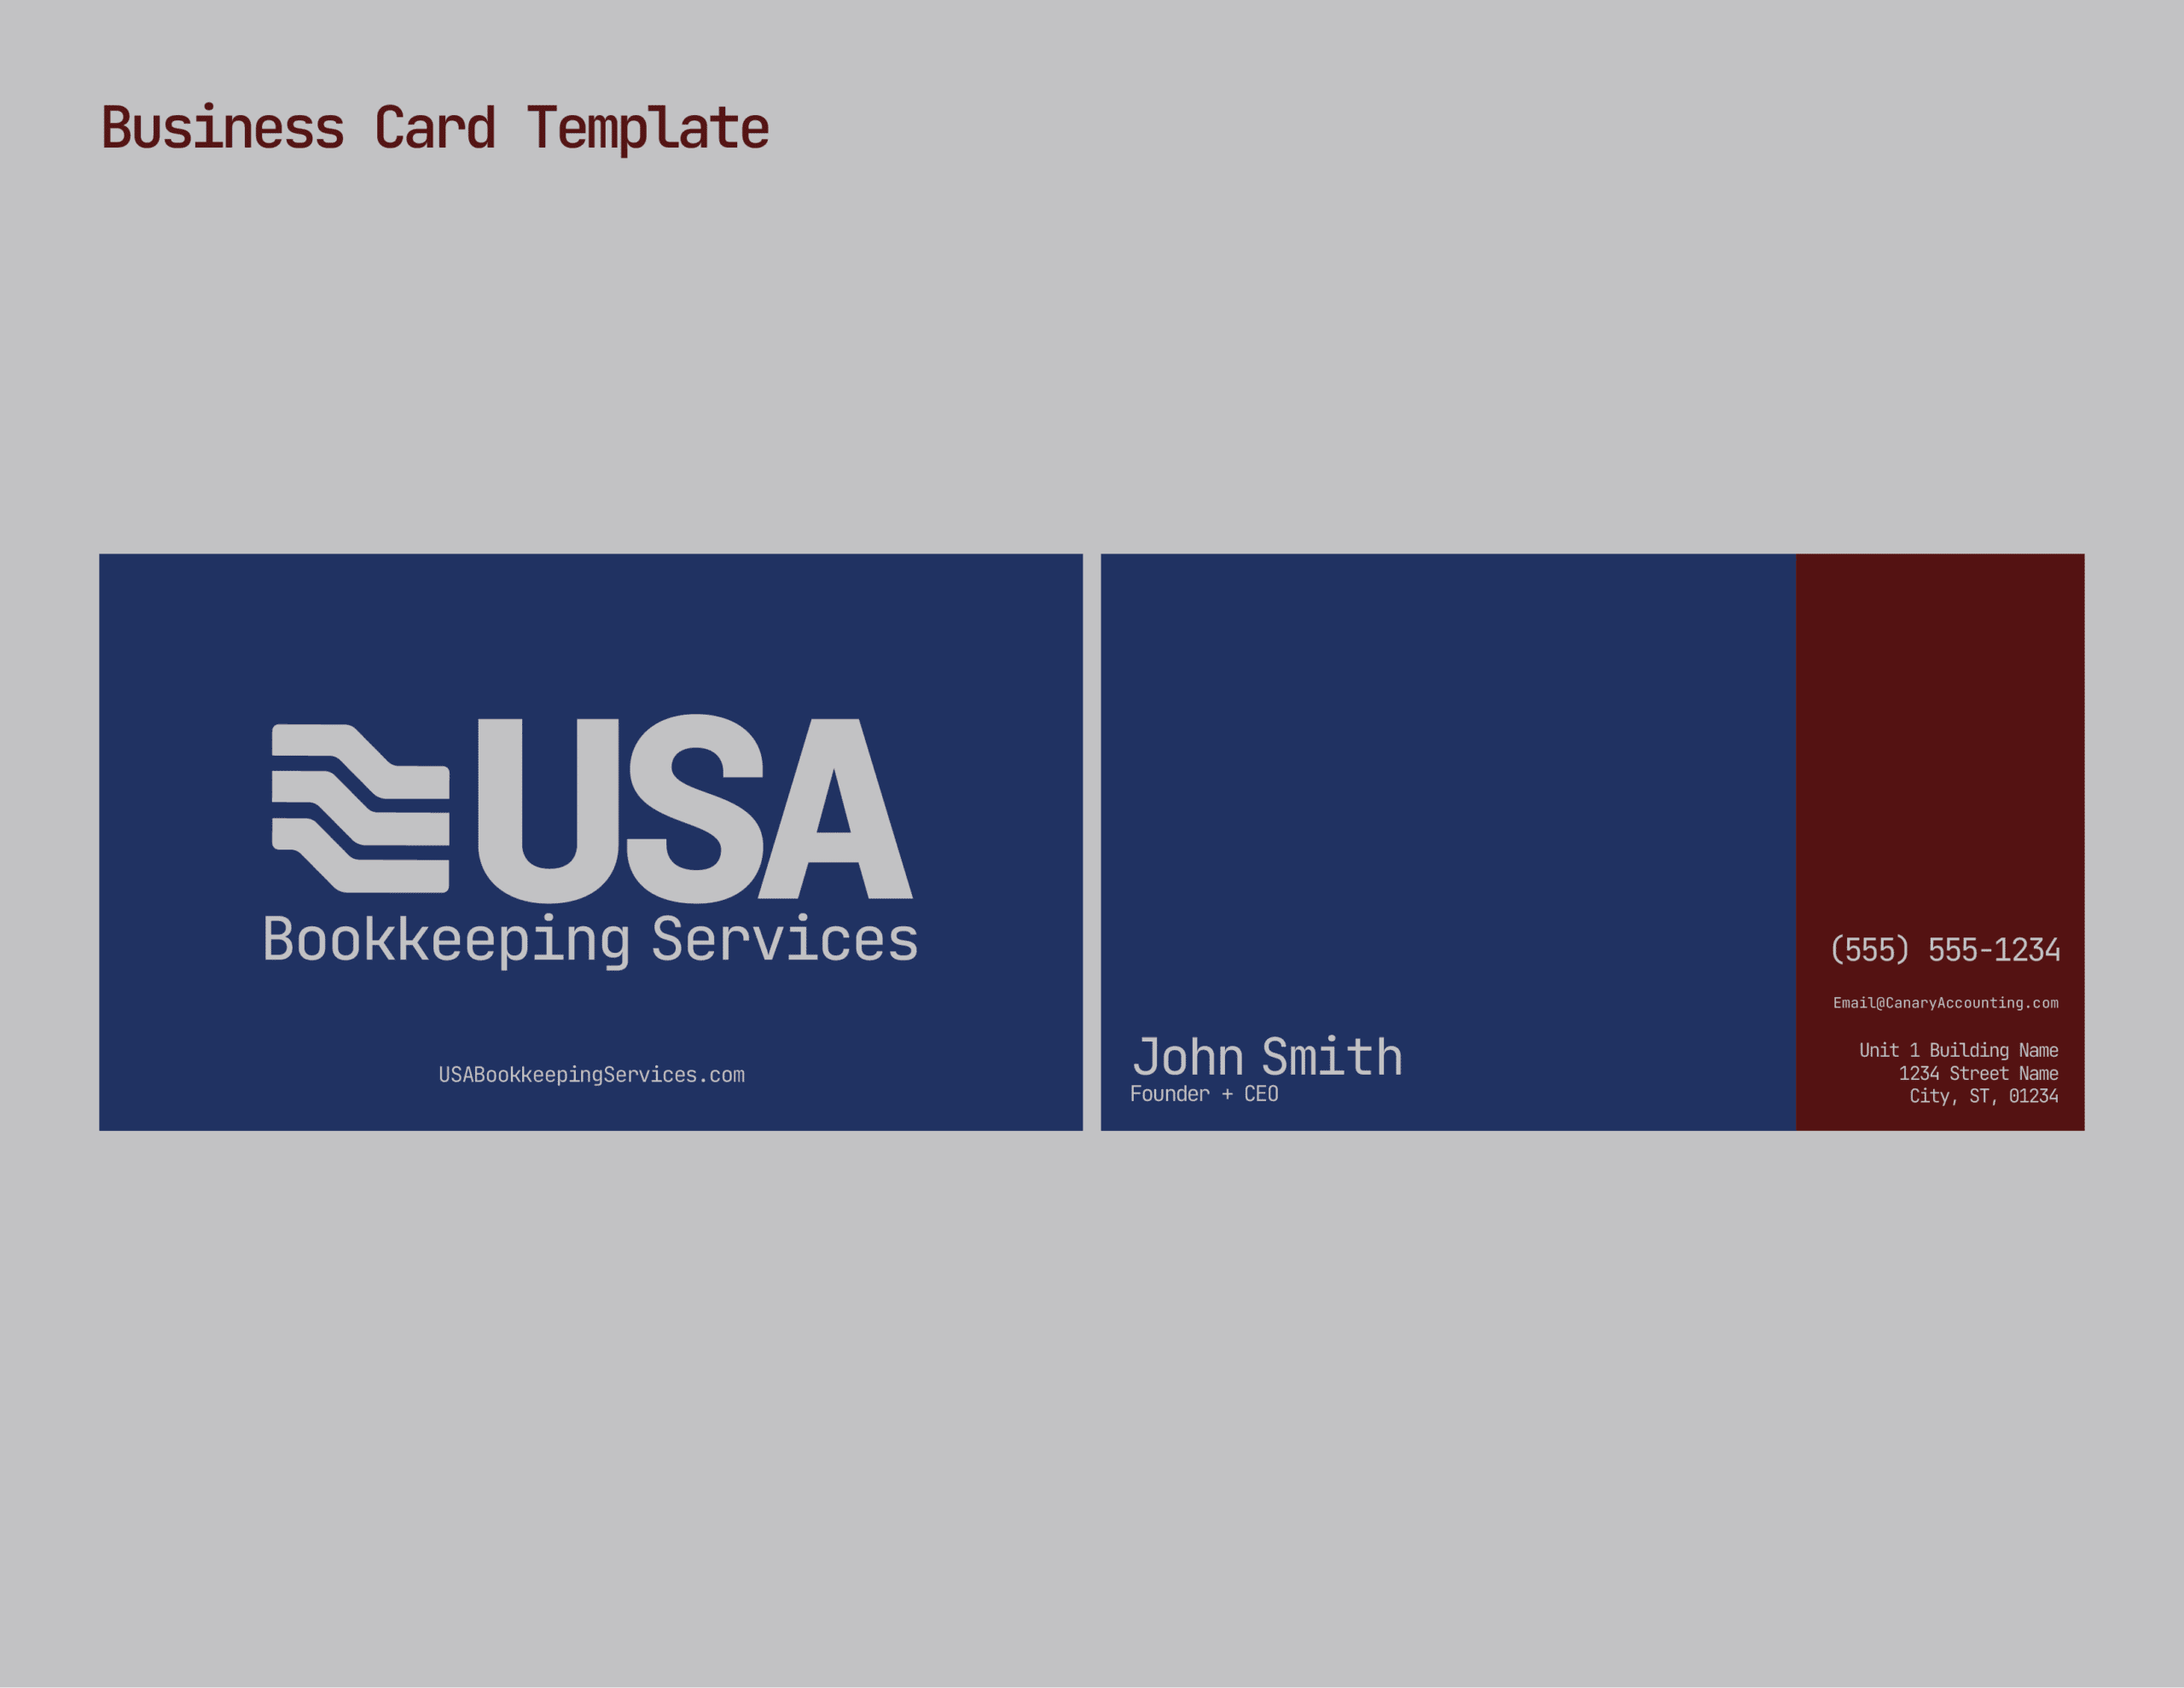 04 - USABKS_BUSINESS_CARD_TEMPLATE